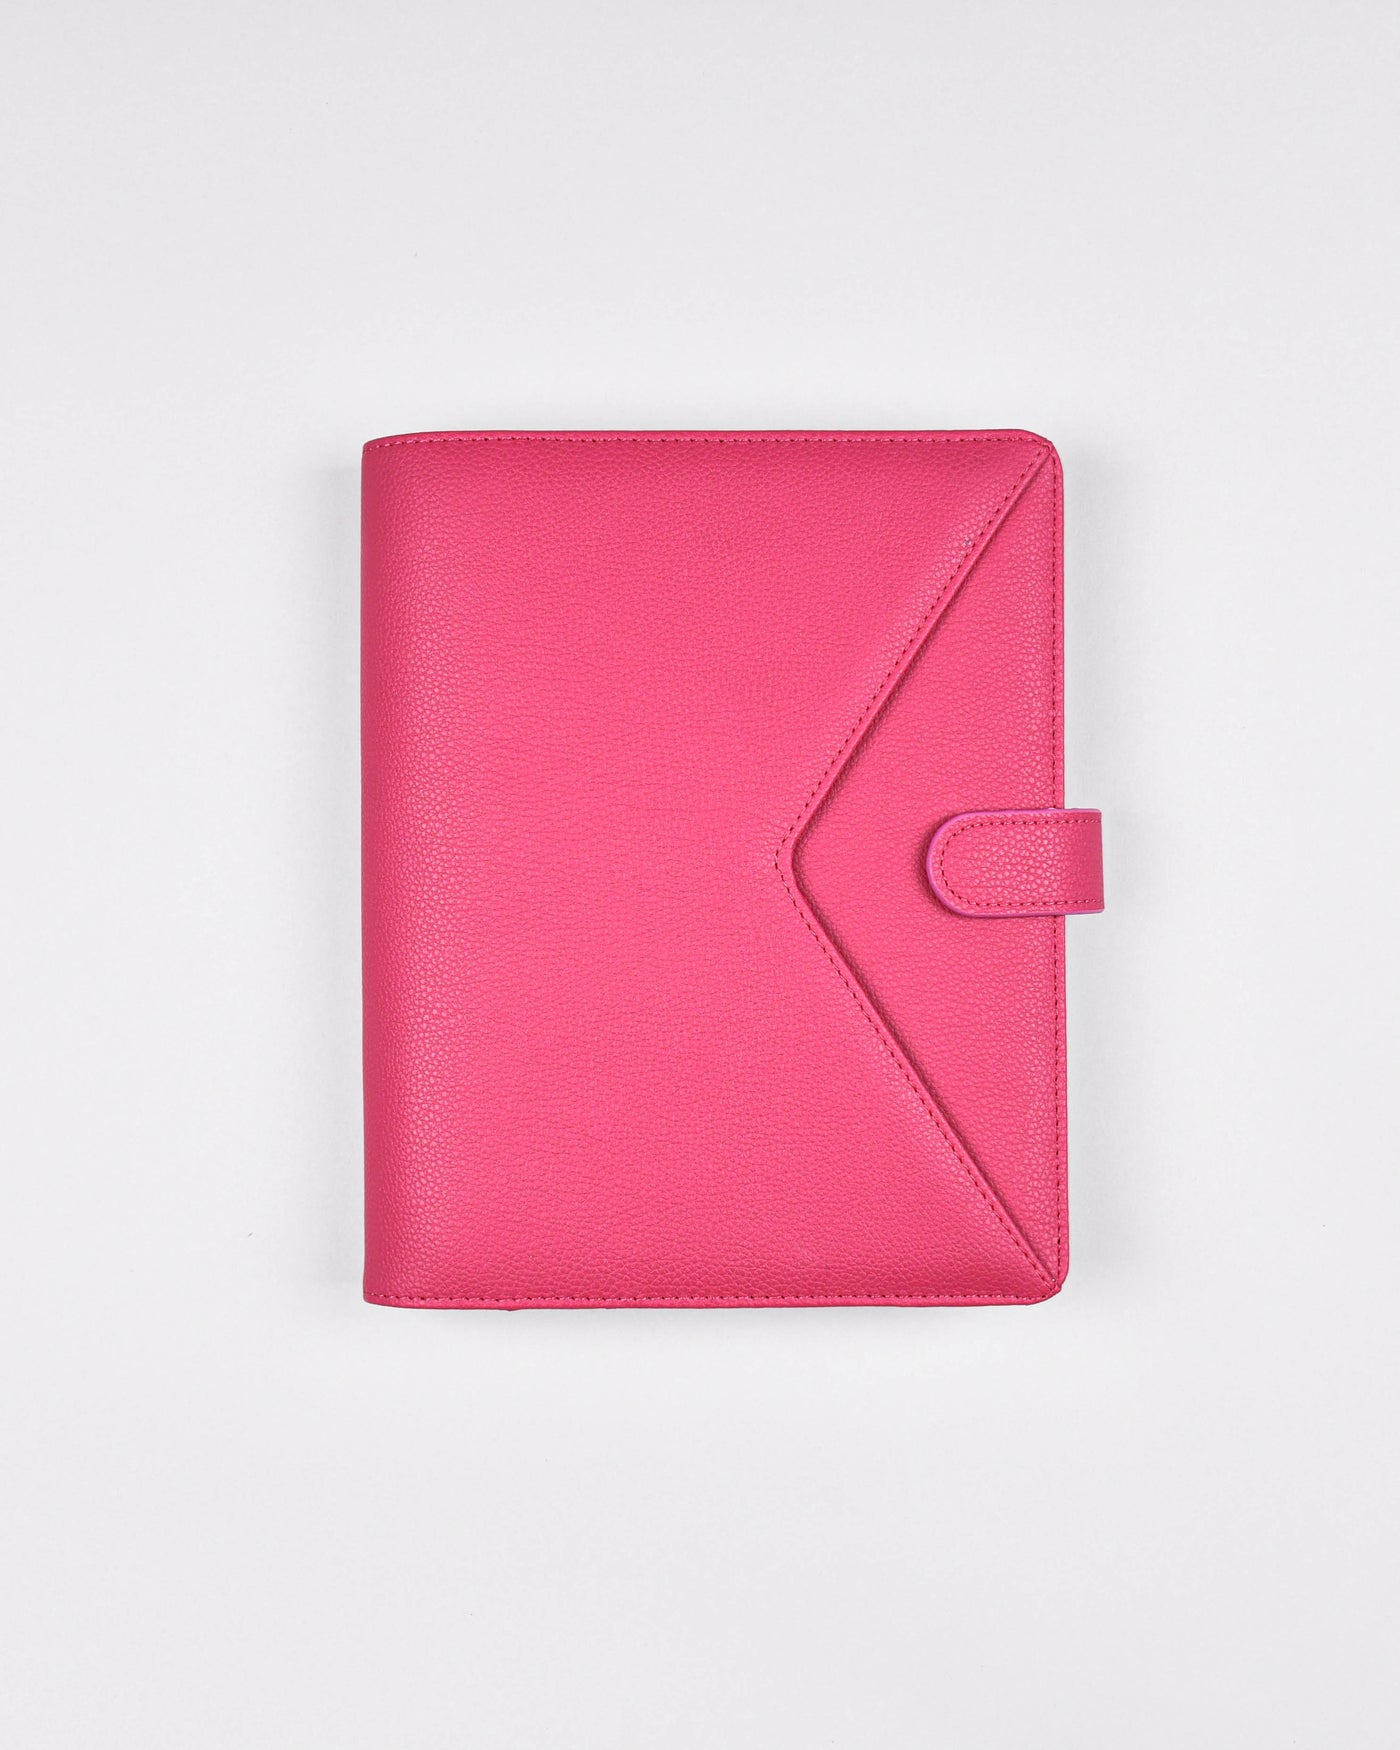 Viva Raspberry Folio Planner Cover with Exterior Pocket